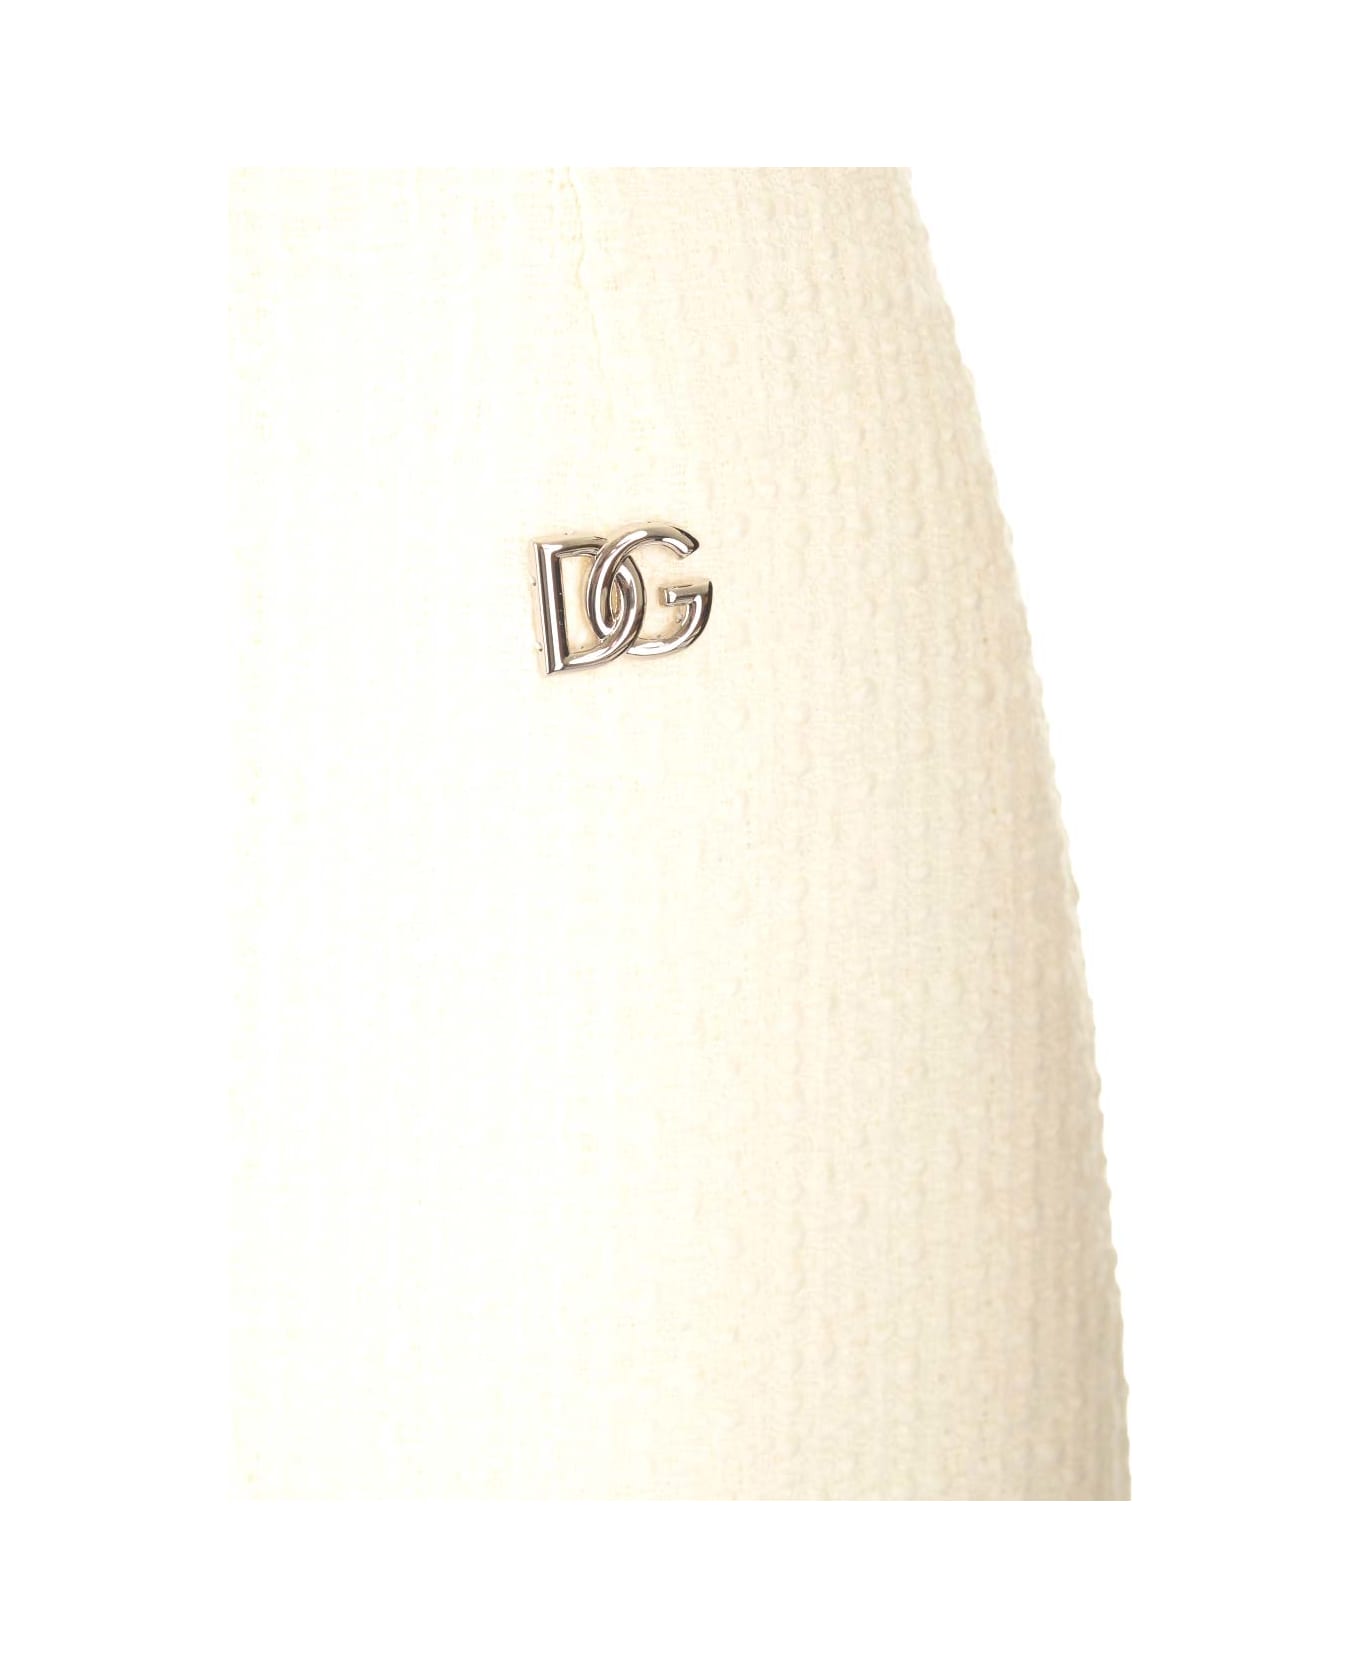 Dolce & Gabbana A-line Skirt - White スカート